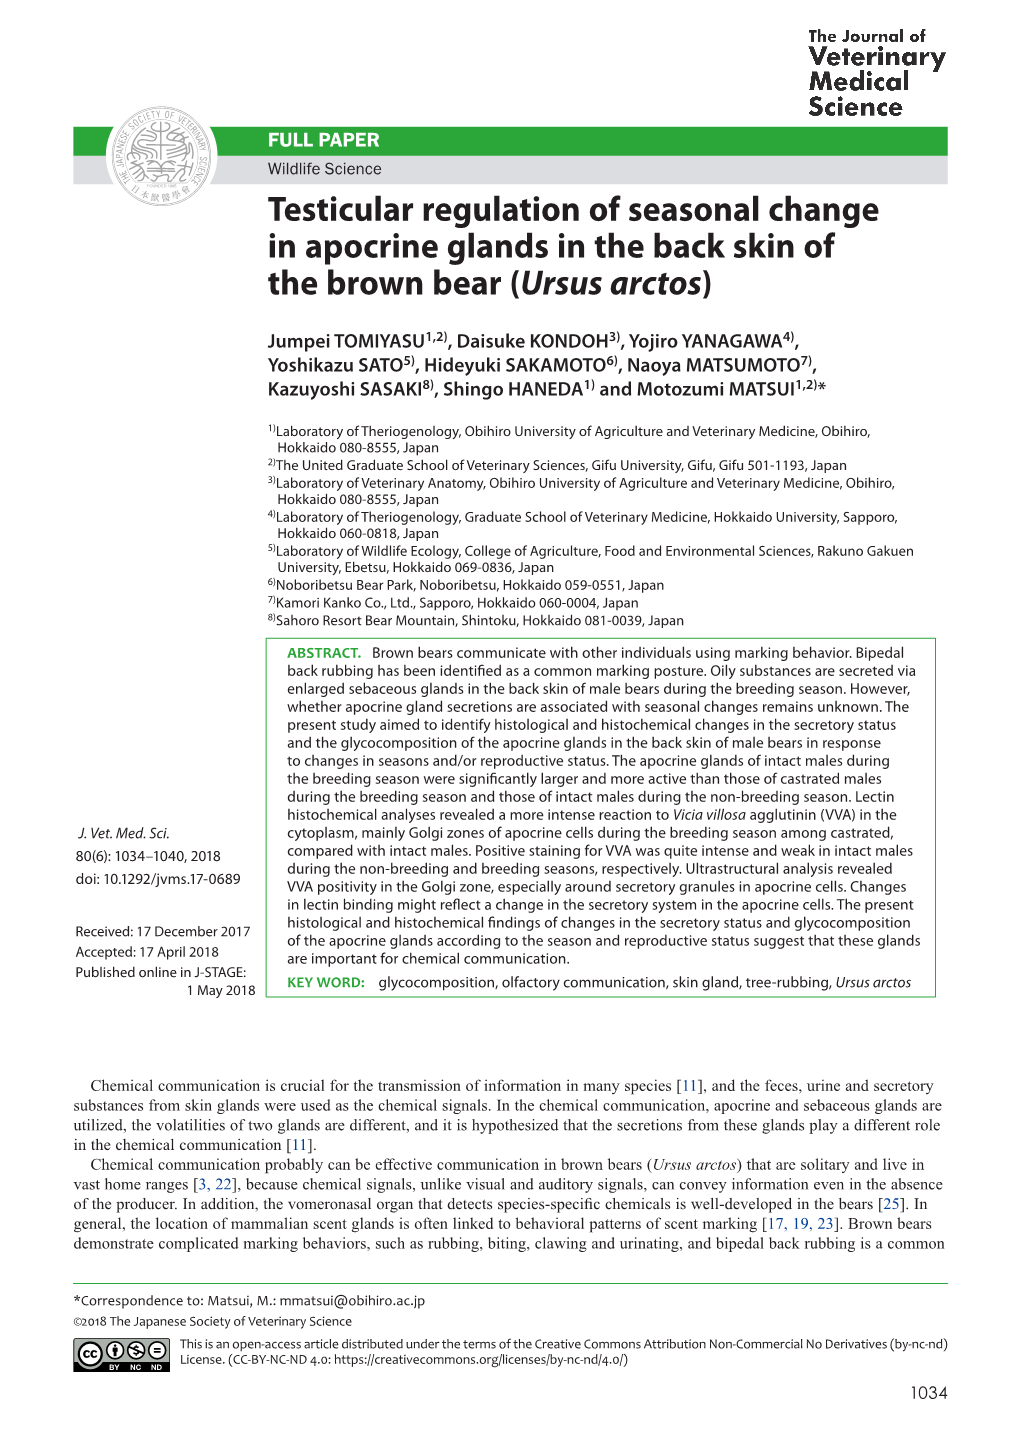 Testicular Regulation of Seasonal Change in Apocrine Glands in the Back Skin of the Brown Bear (Ursus Arctos)